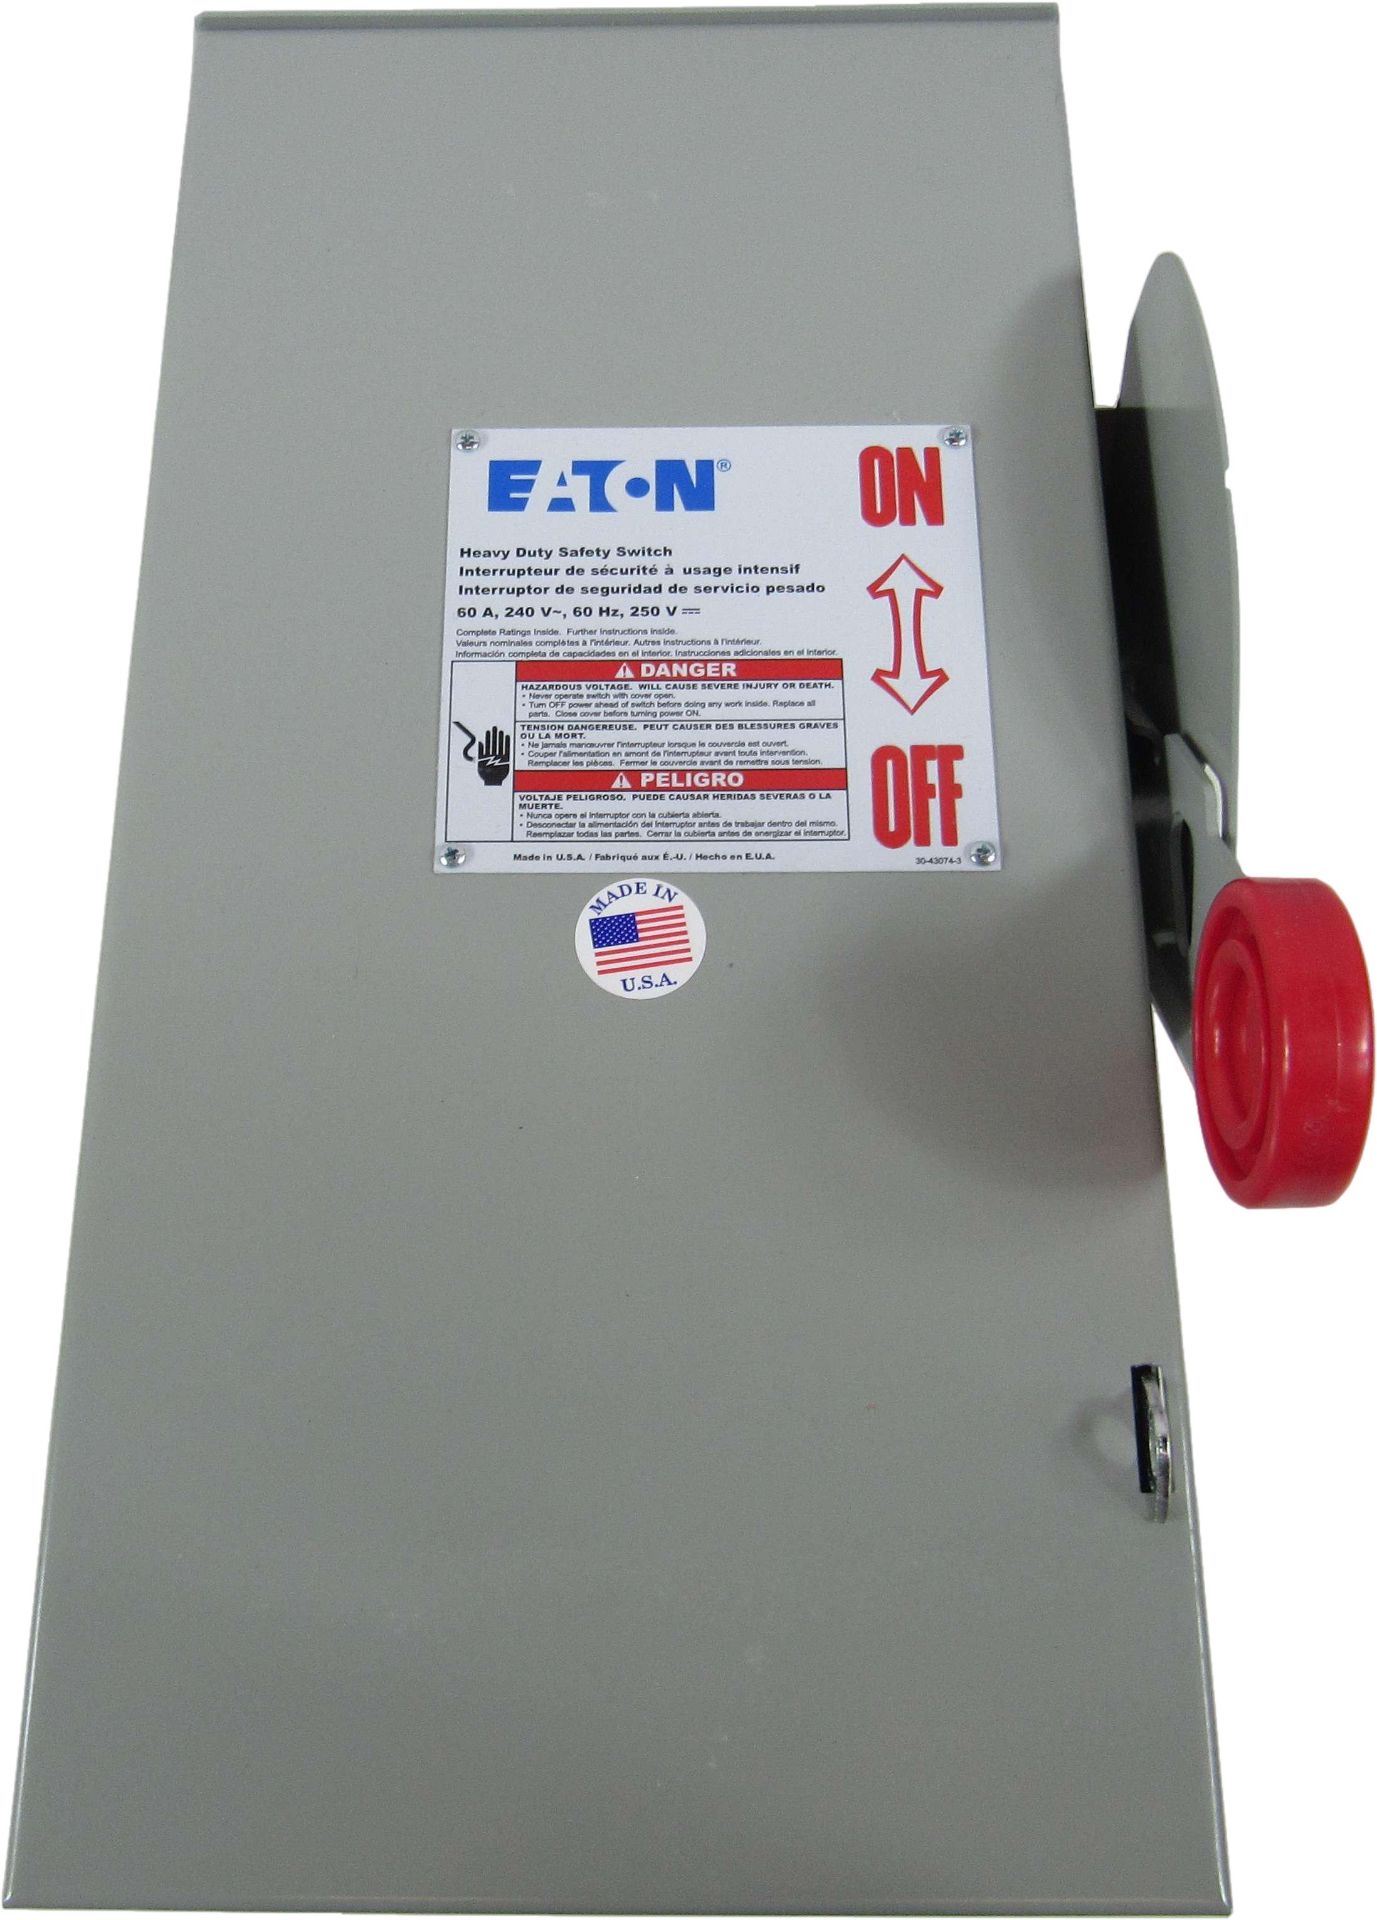 1x Eaton DH322FRK Heavy Duty Safety Switches DH 3P 60A 240V 50/60Hz 3Ph EA NEMA 3R